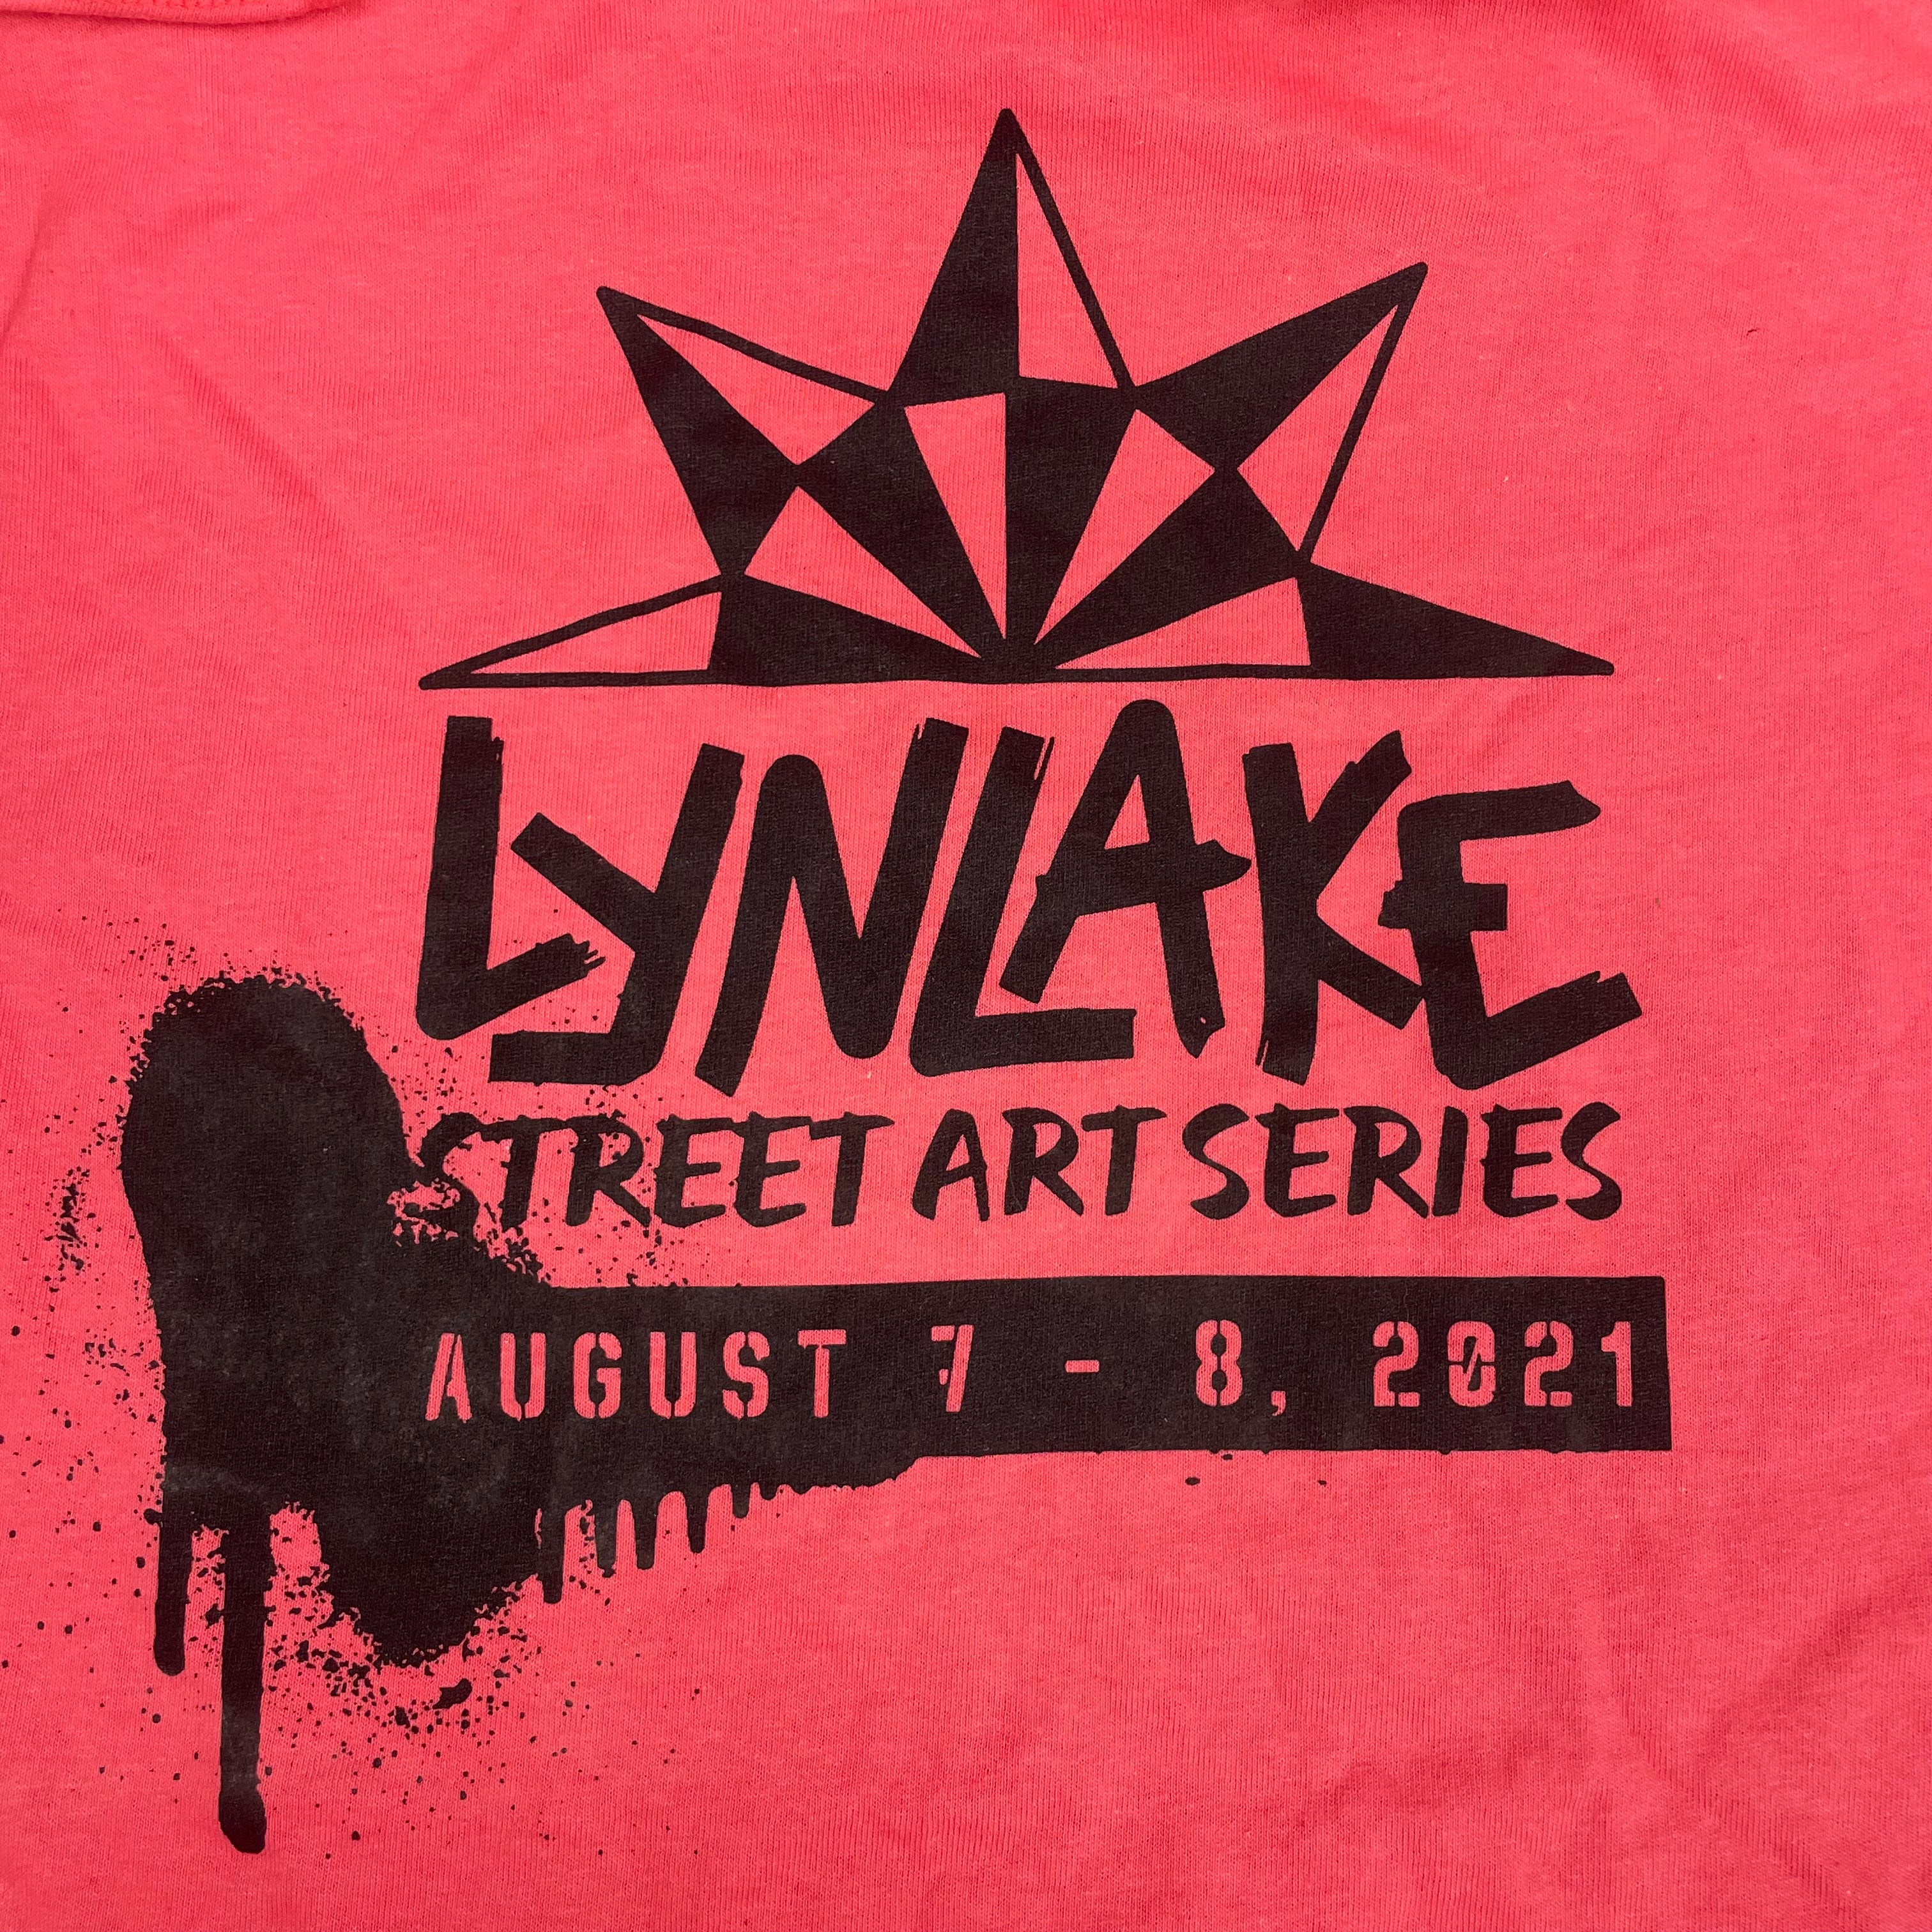 Lynlake Street Art Series 2021 shirt